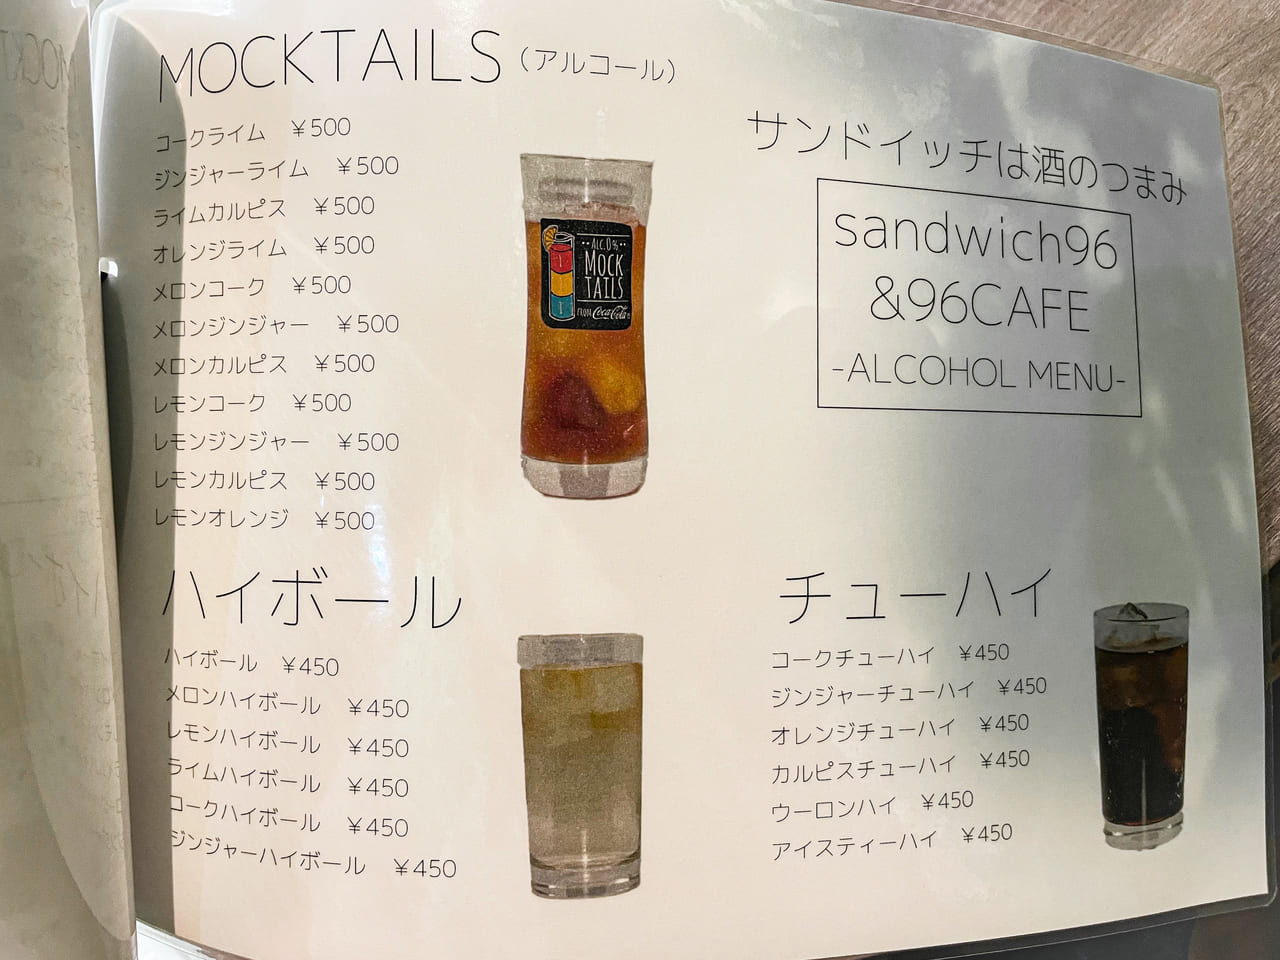 sandwich'96 & 96cafe